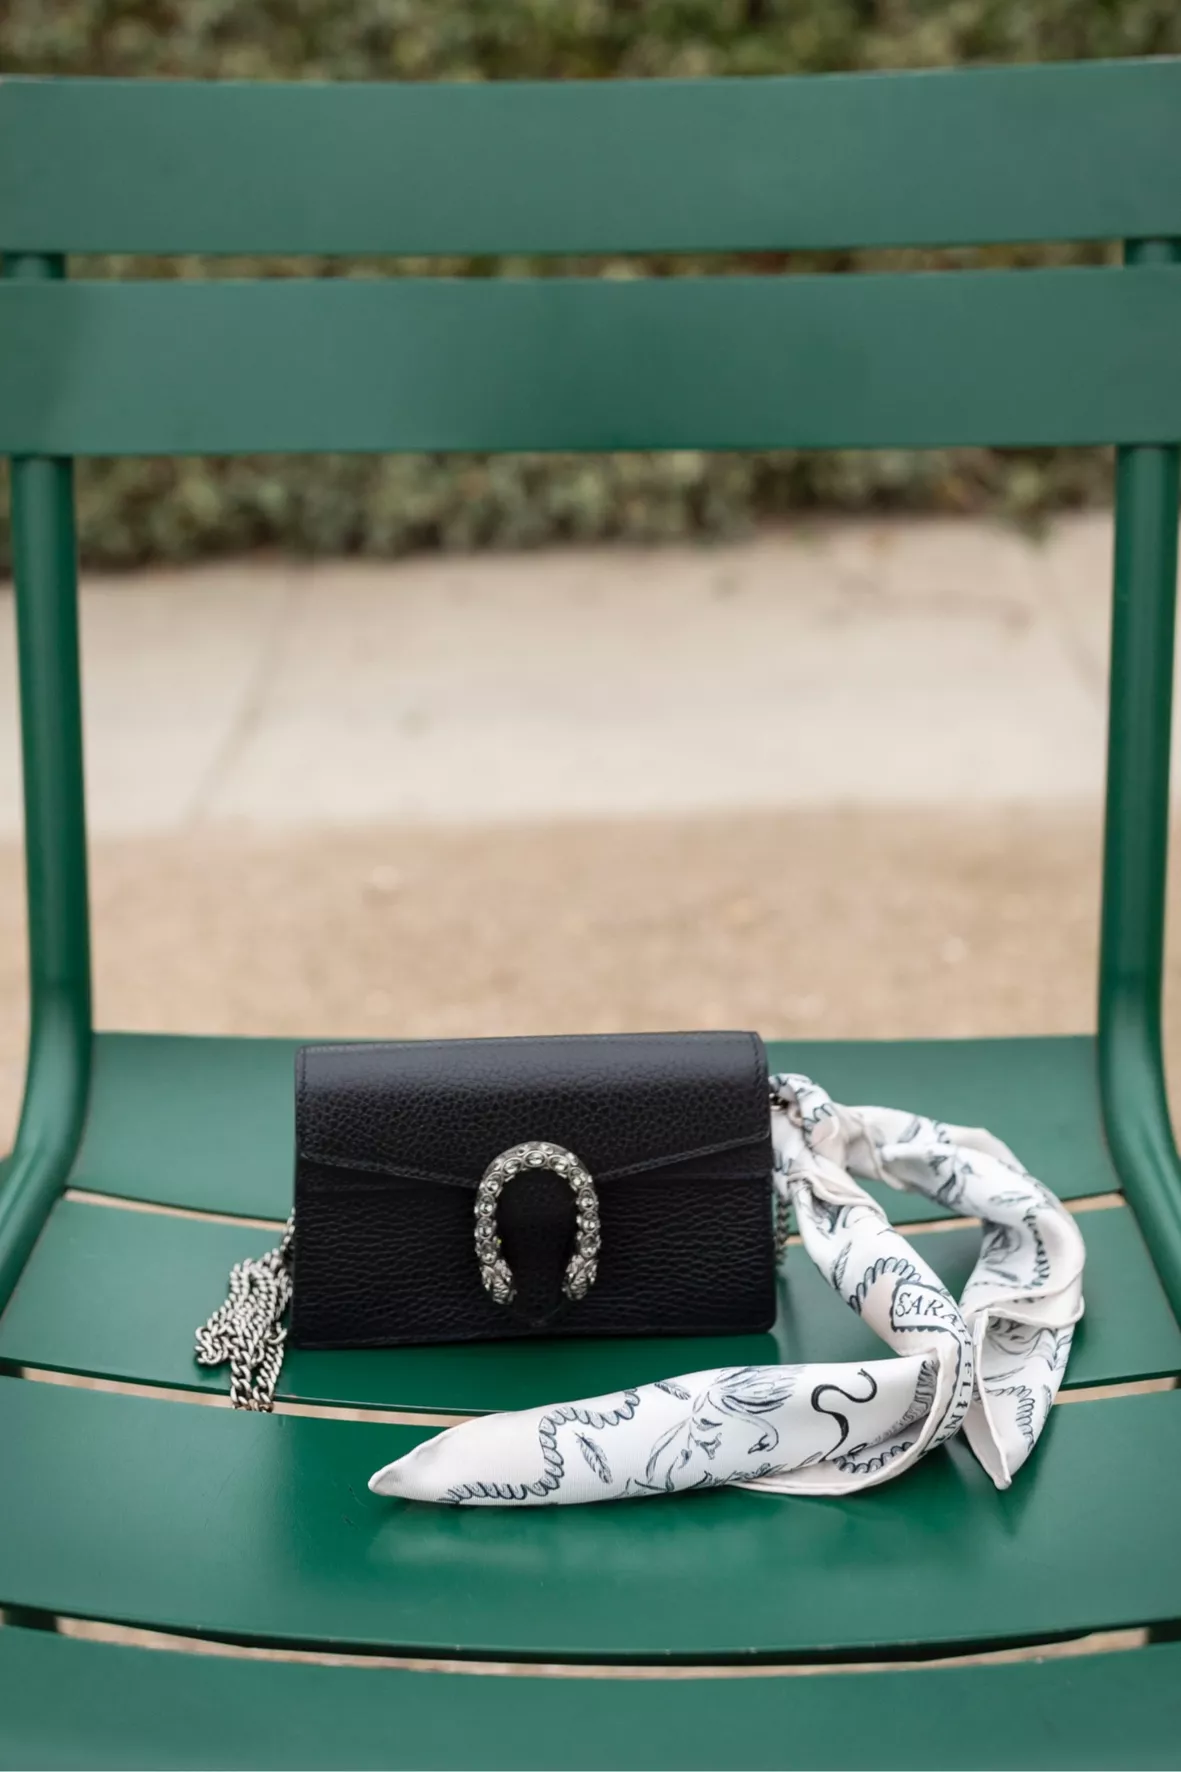 Gucci Dionysus leather shoulder bag curated on LTK